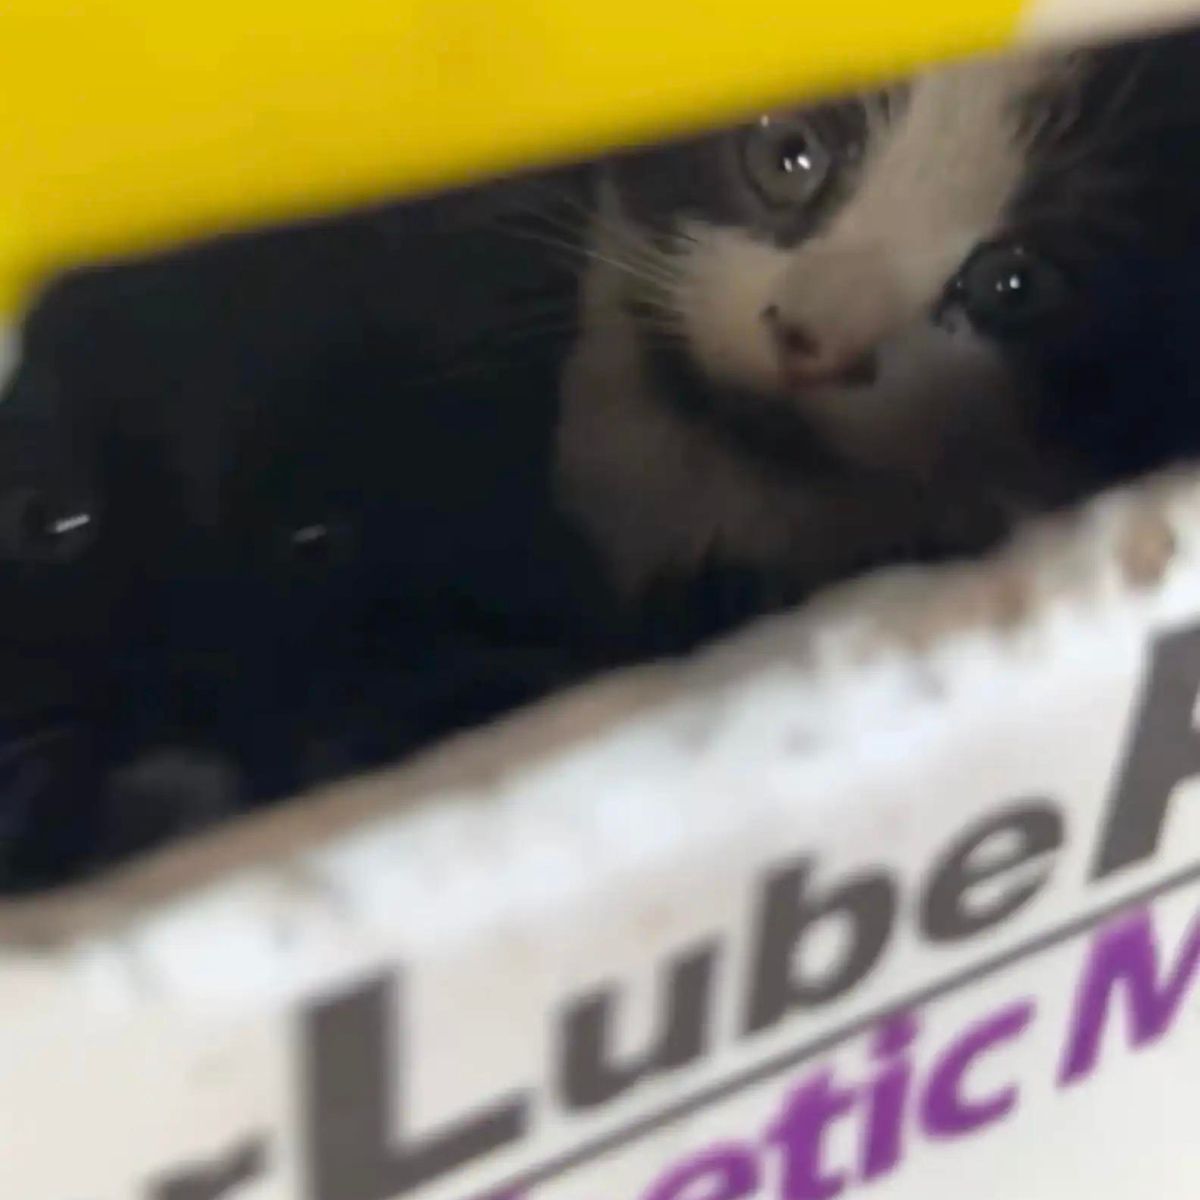 kitten in the box